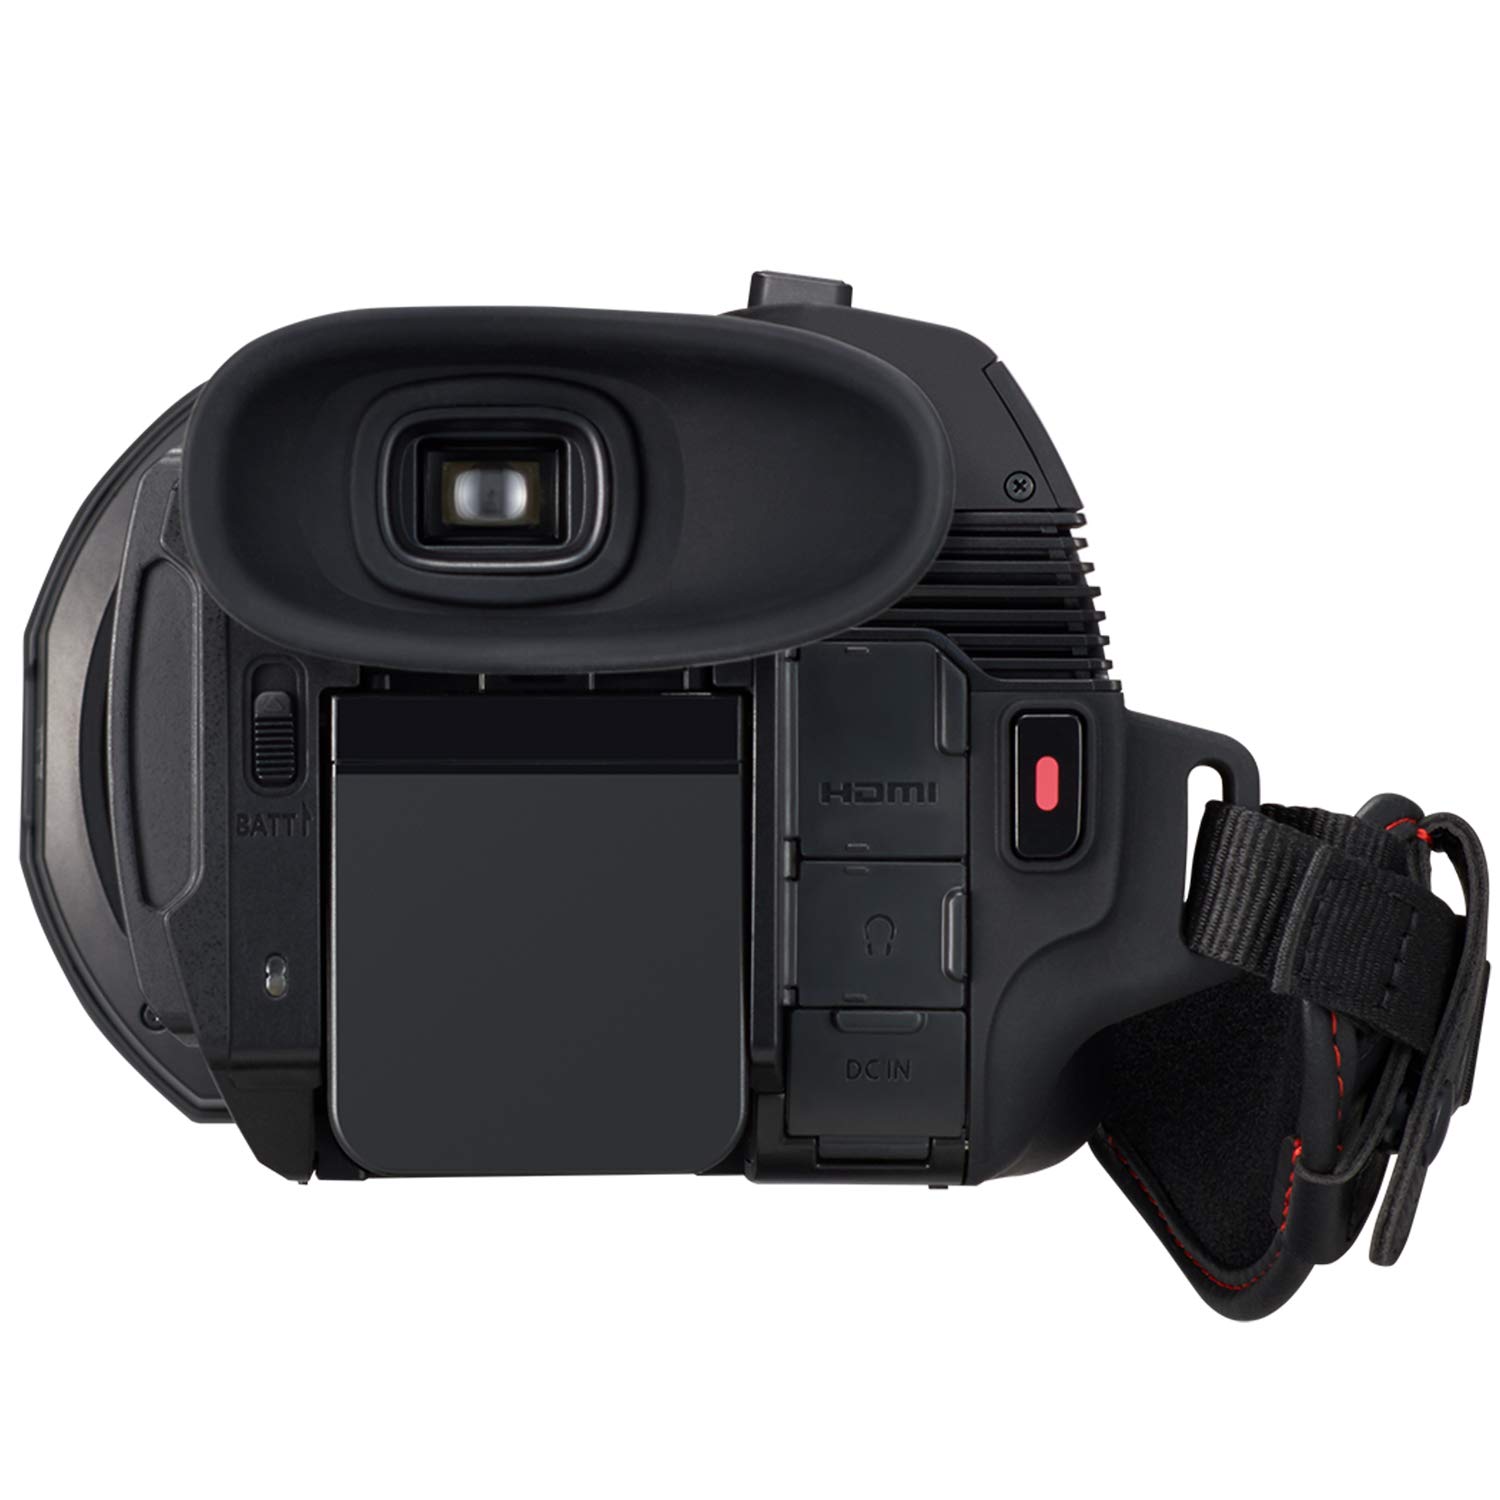 Panasonic X1500 4K Professional Camcorder with 24X Optical Zoom, WiFi HD Live Streaming, HC-X1500 (USA Black)